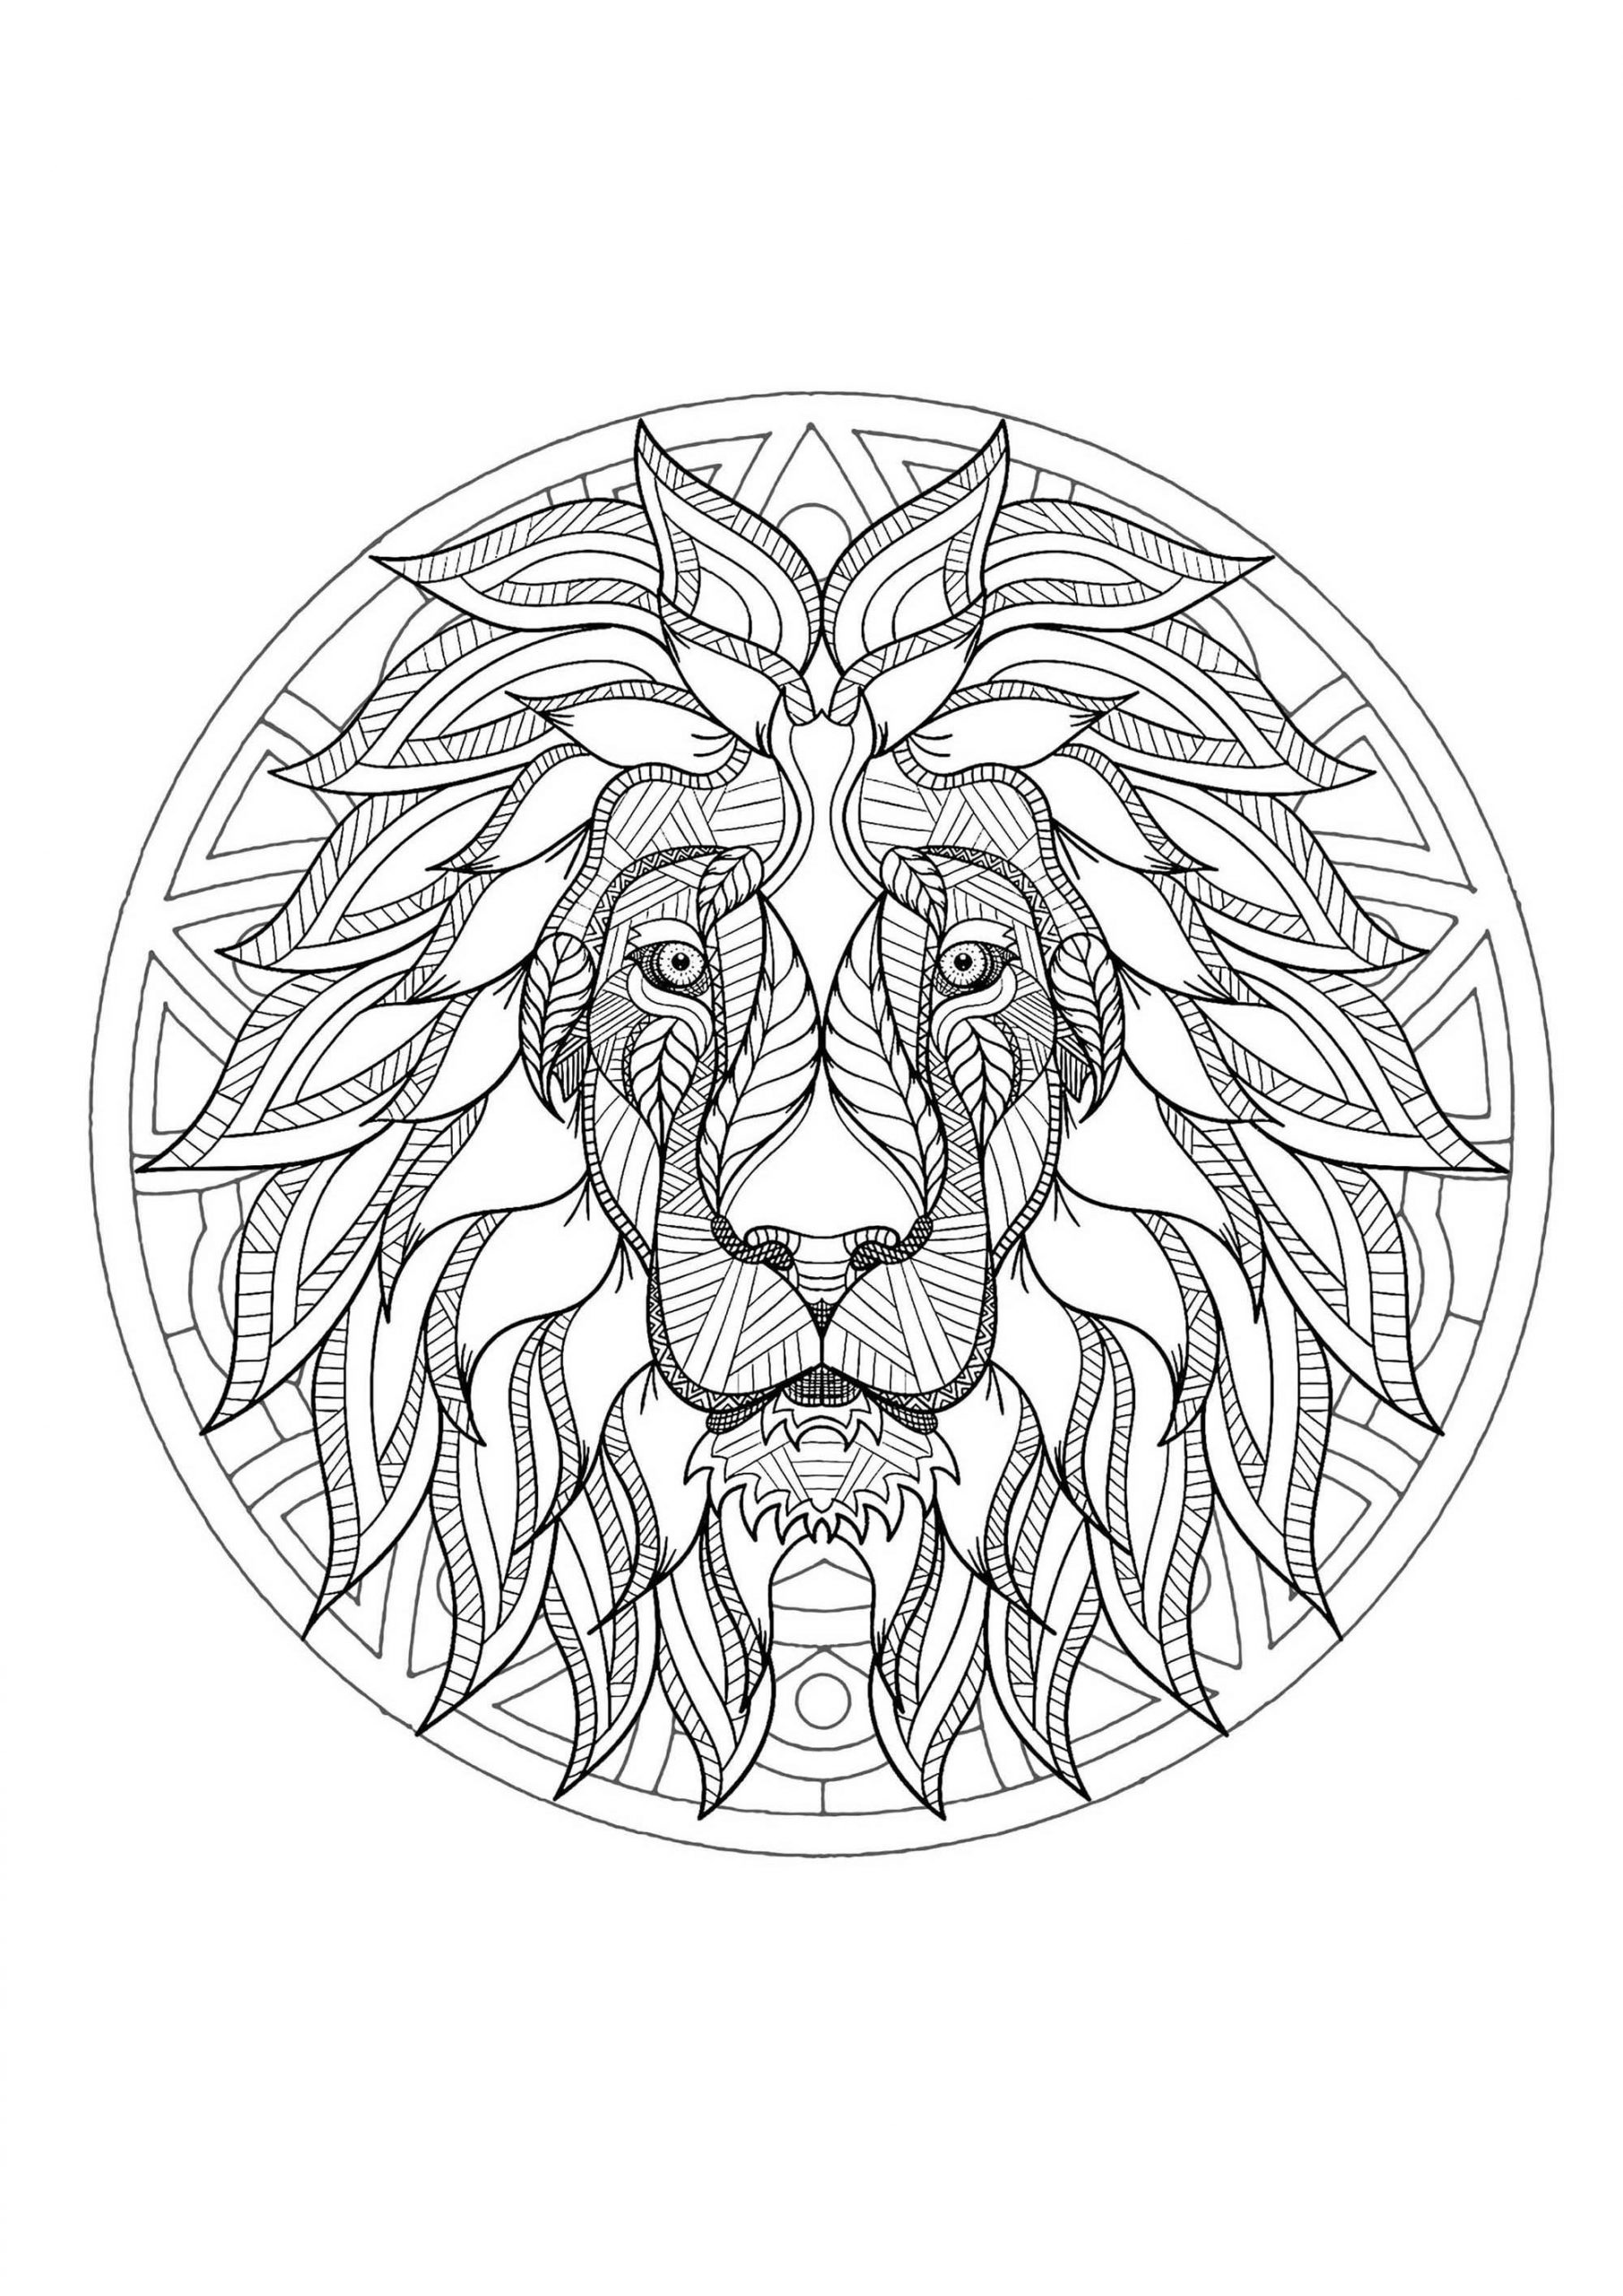 Dessin A Imprimer Mandala Élégant Images Mandala with Incredible Lion Head and Geometric Patterns